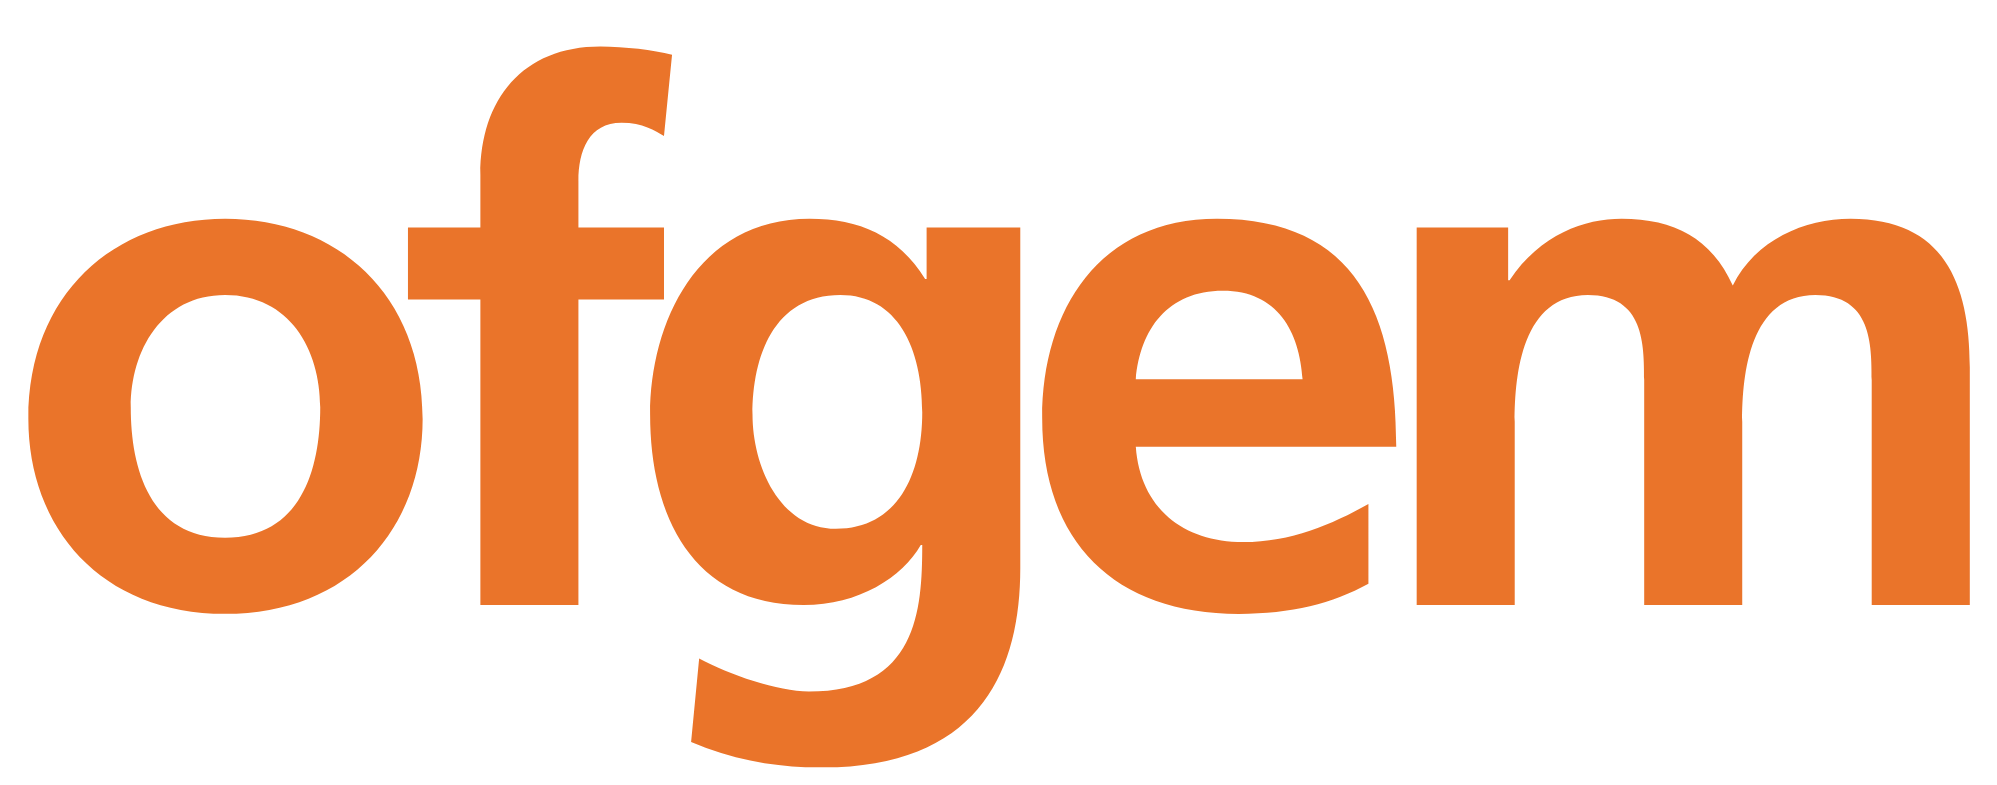 The logo for Ofgem in orange lettering against a white backdrop